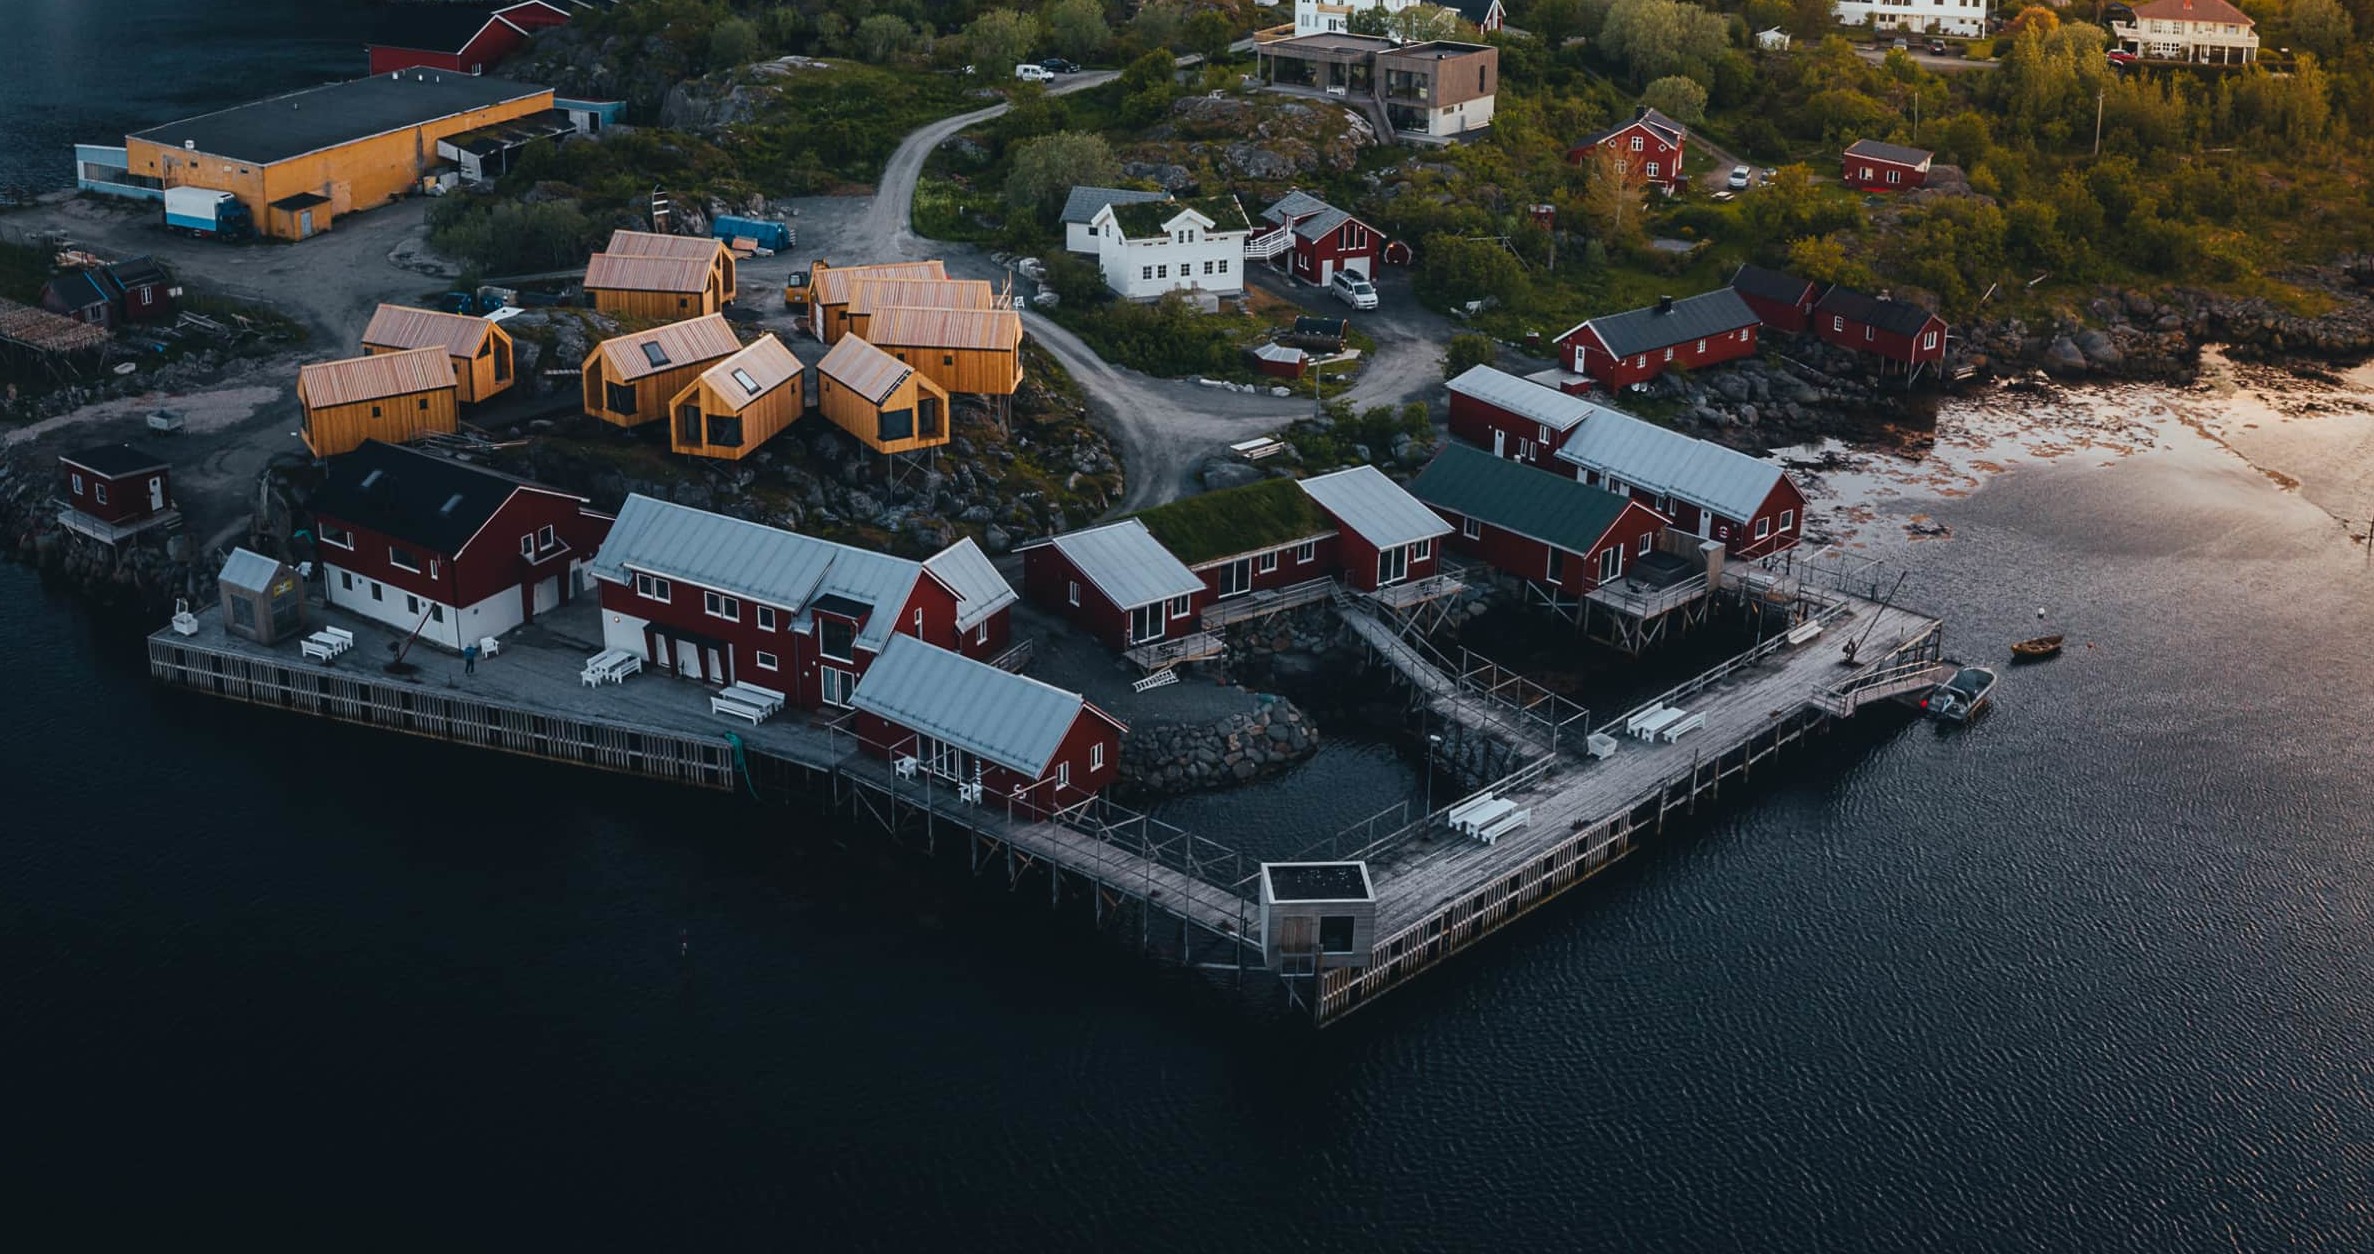 Overview of Hattvika Lodge in the Lofoten islands